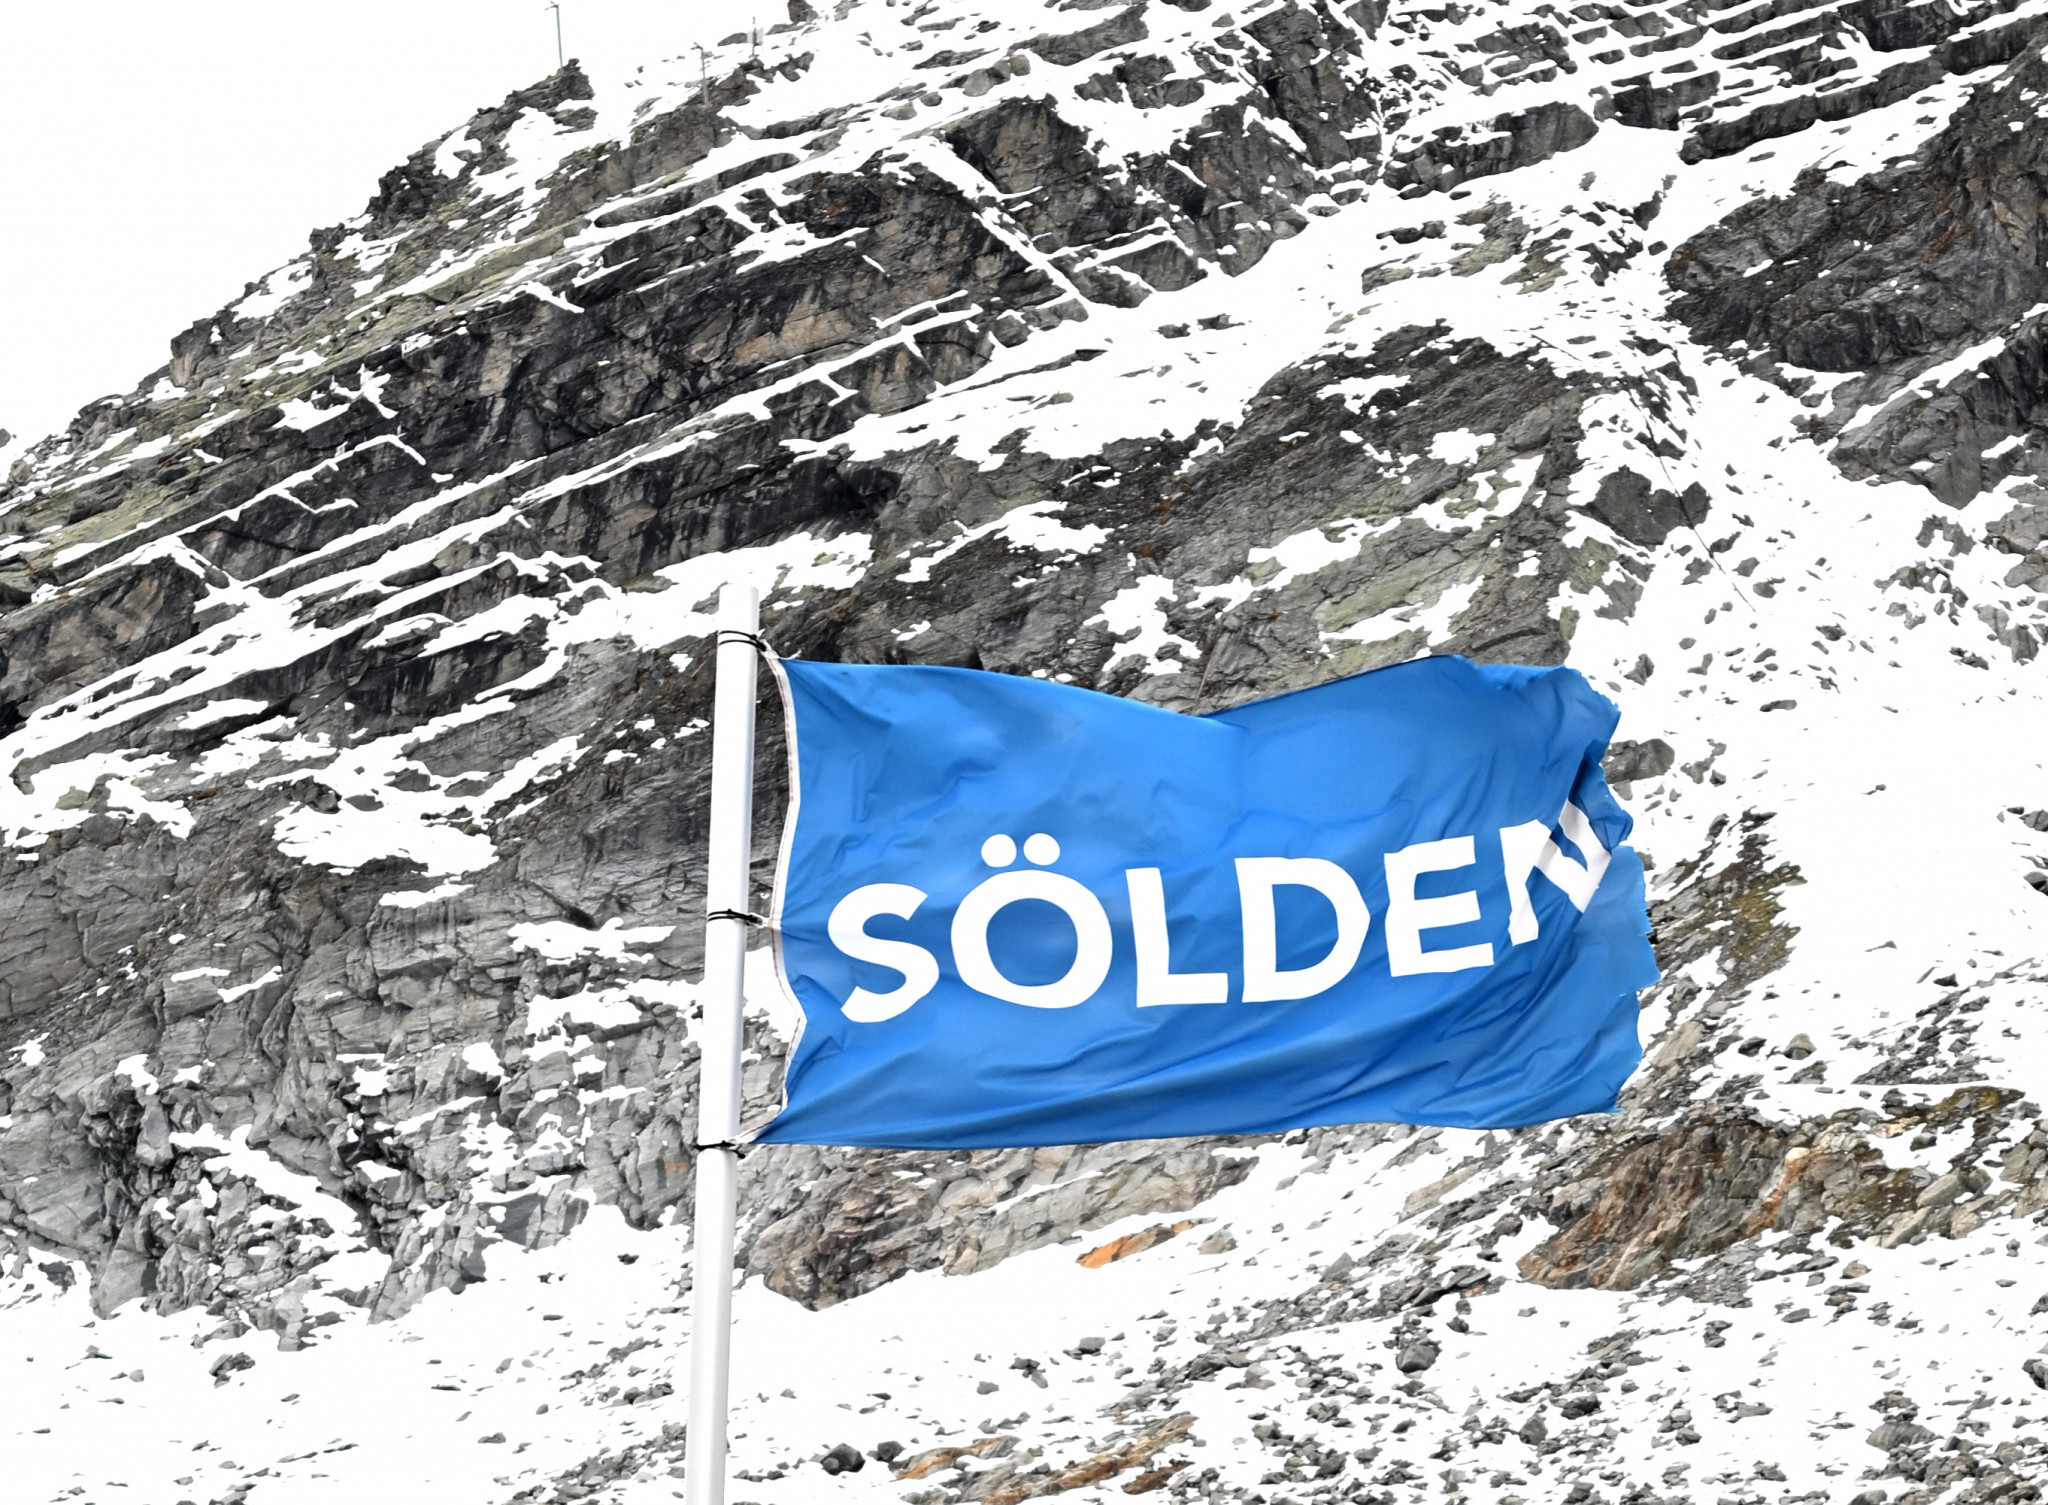 Bad weather cancels first race of Alpine Ski World Cup season in Sölden